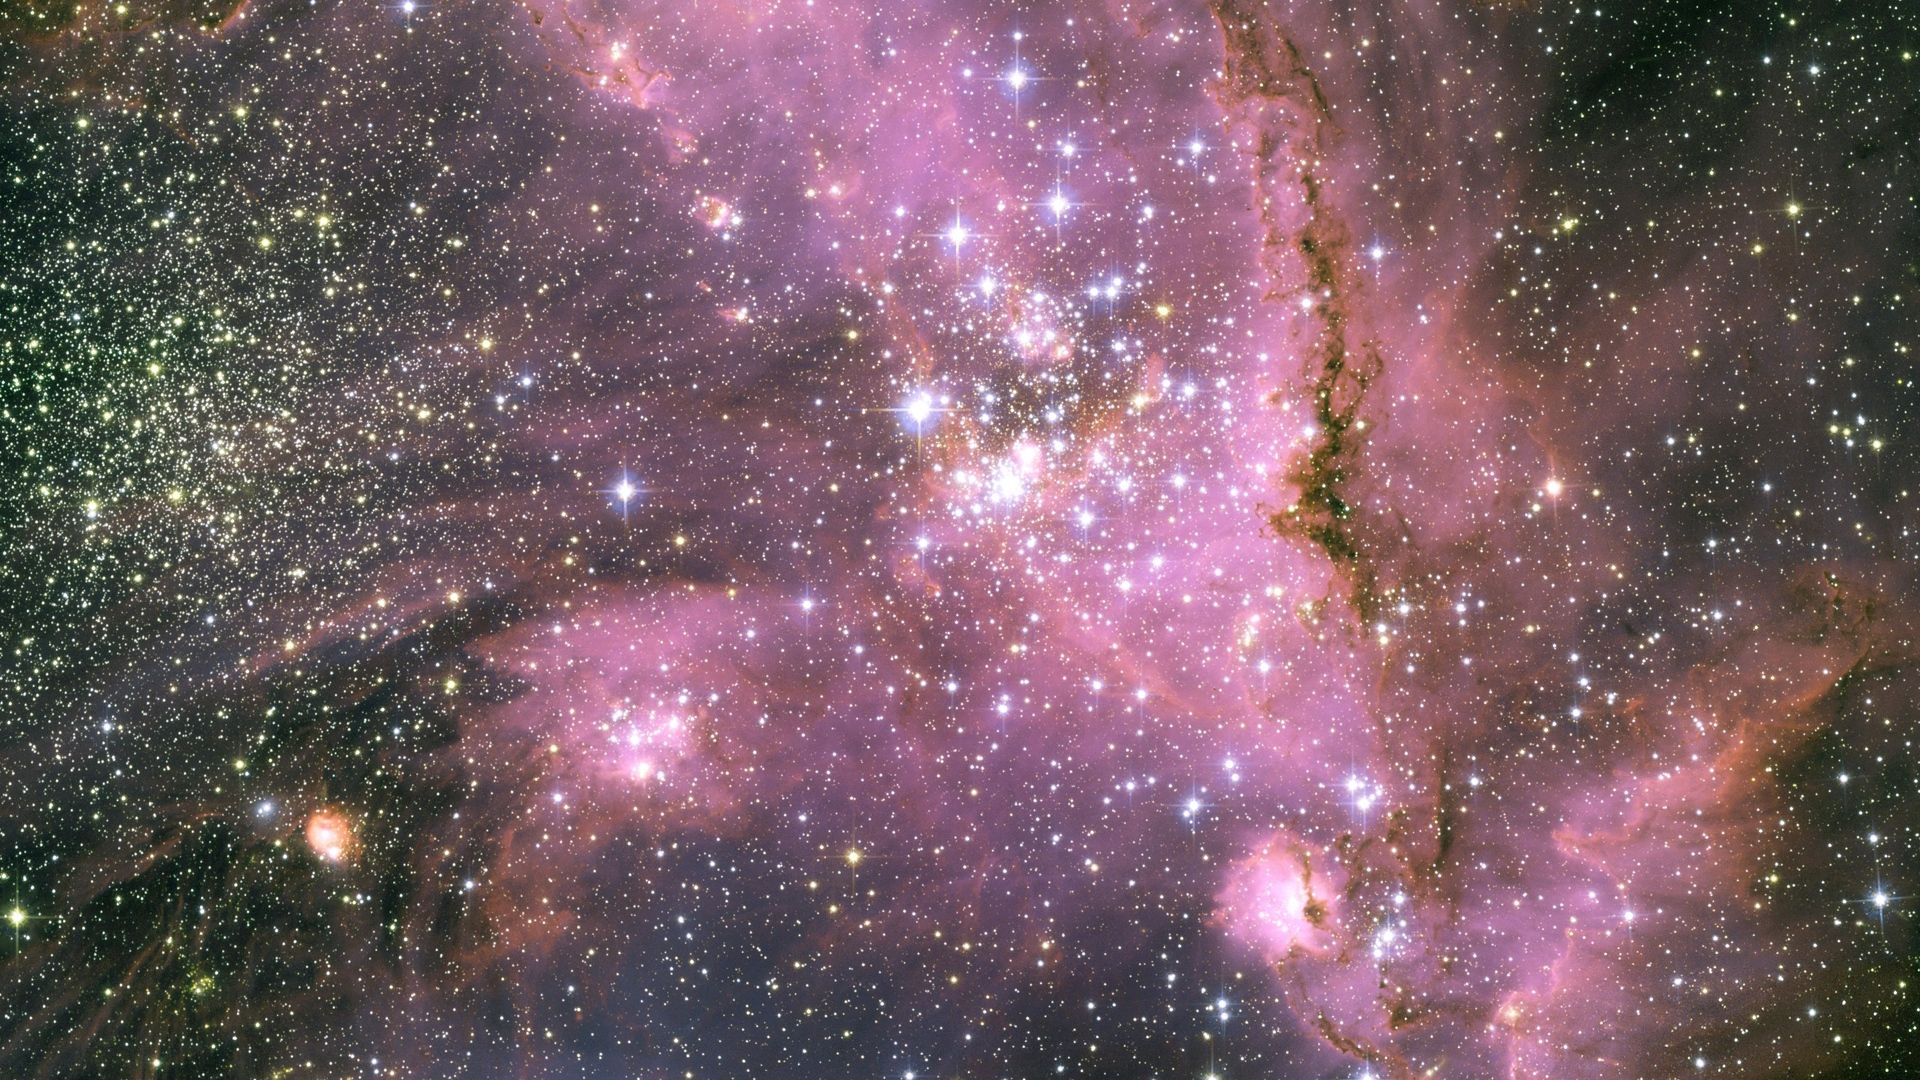 Galaxy Glitter wallpaper photo hd